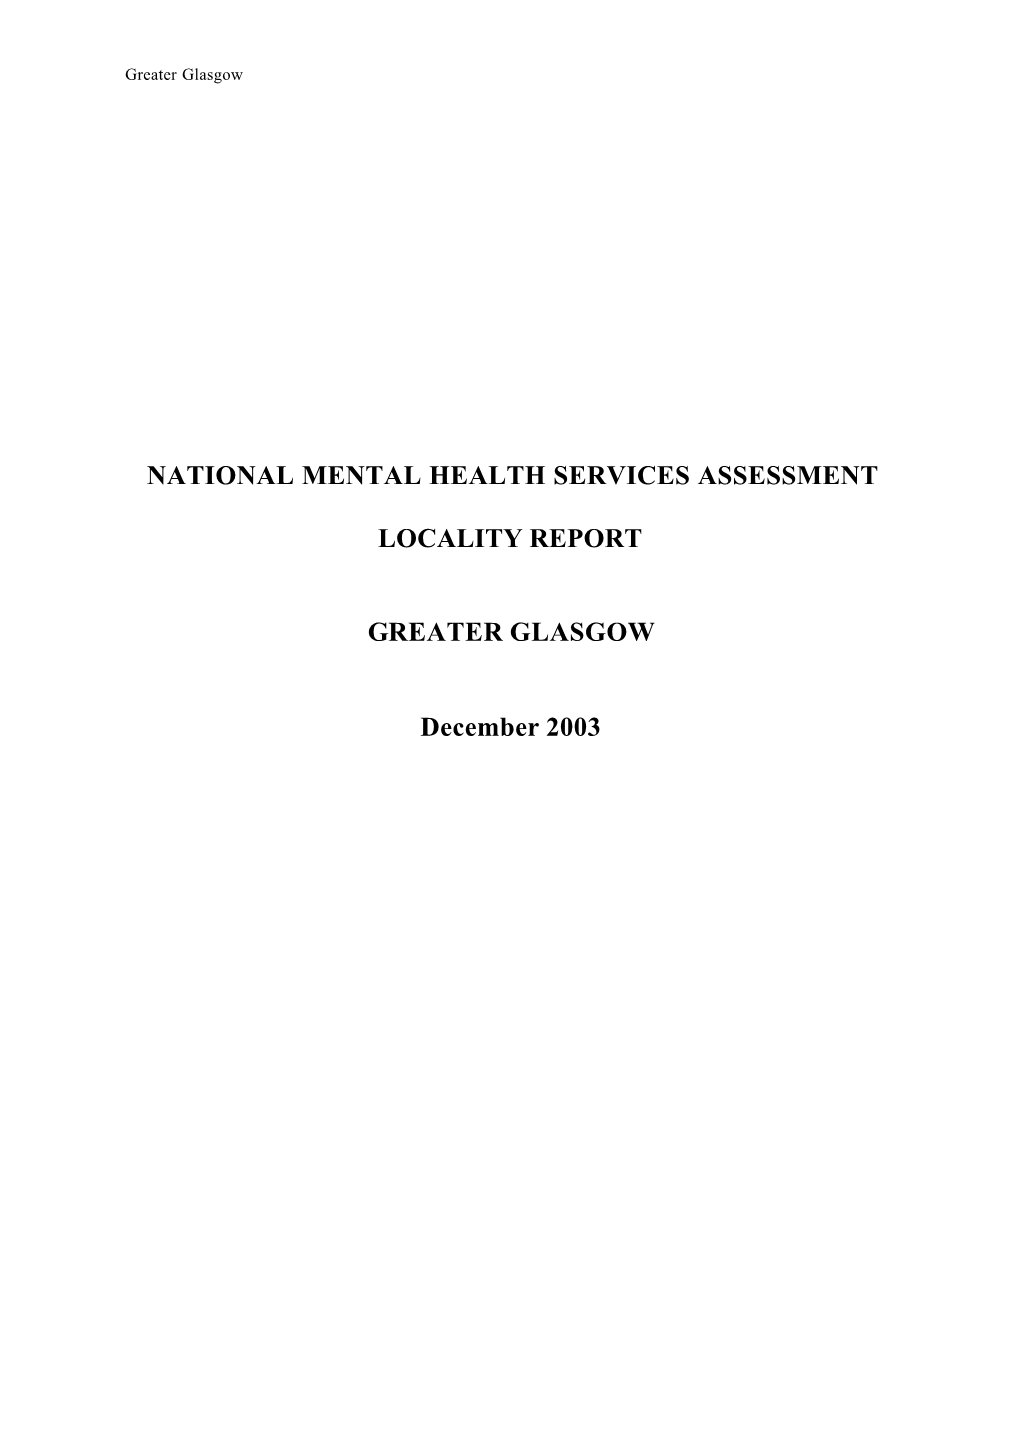 National Mental Health Services Assessment